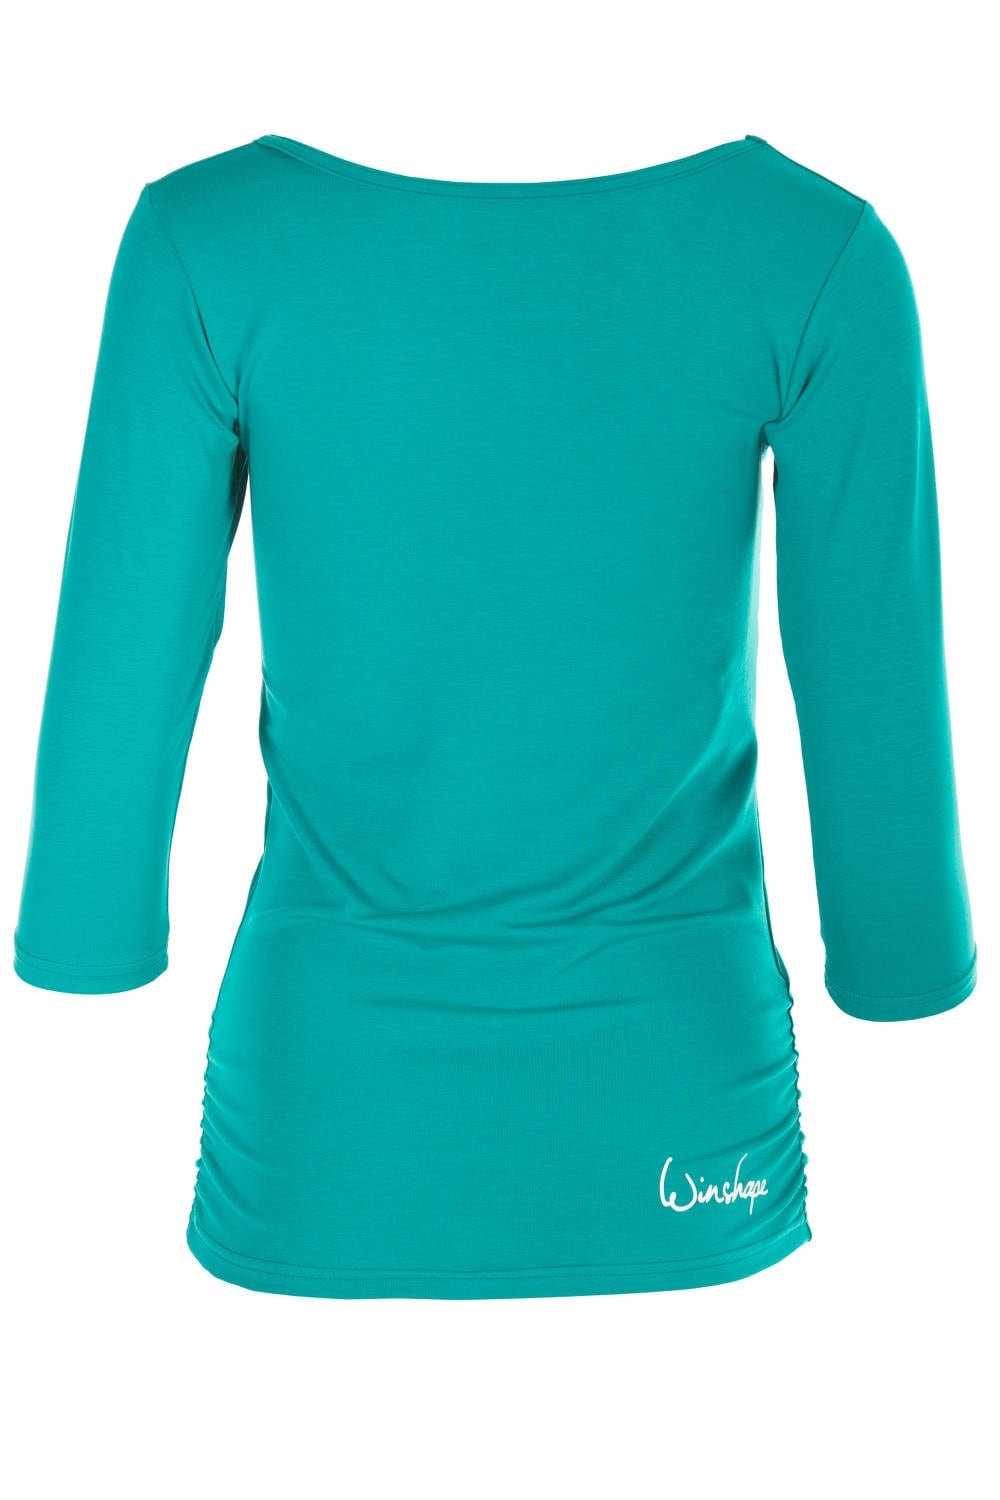 Winshape 3/4-Arm-Shirt OTTO Shop bestellen »WS4« im Online